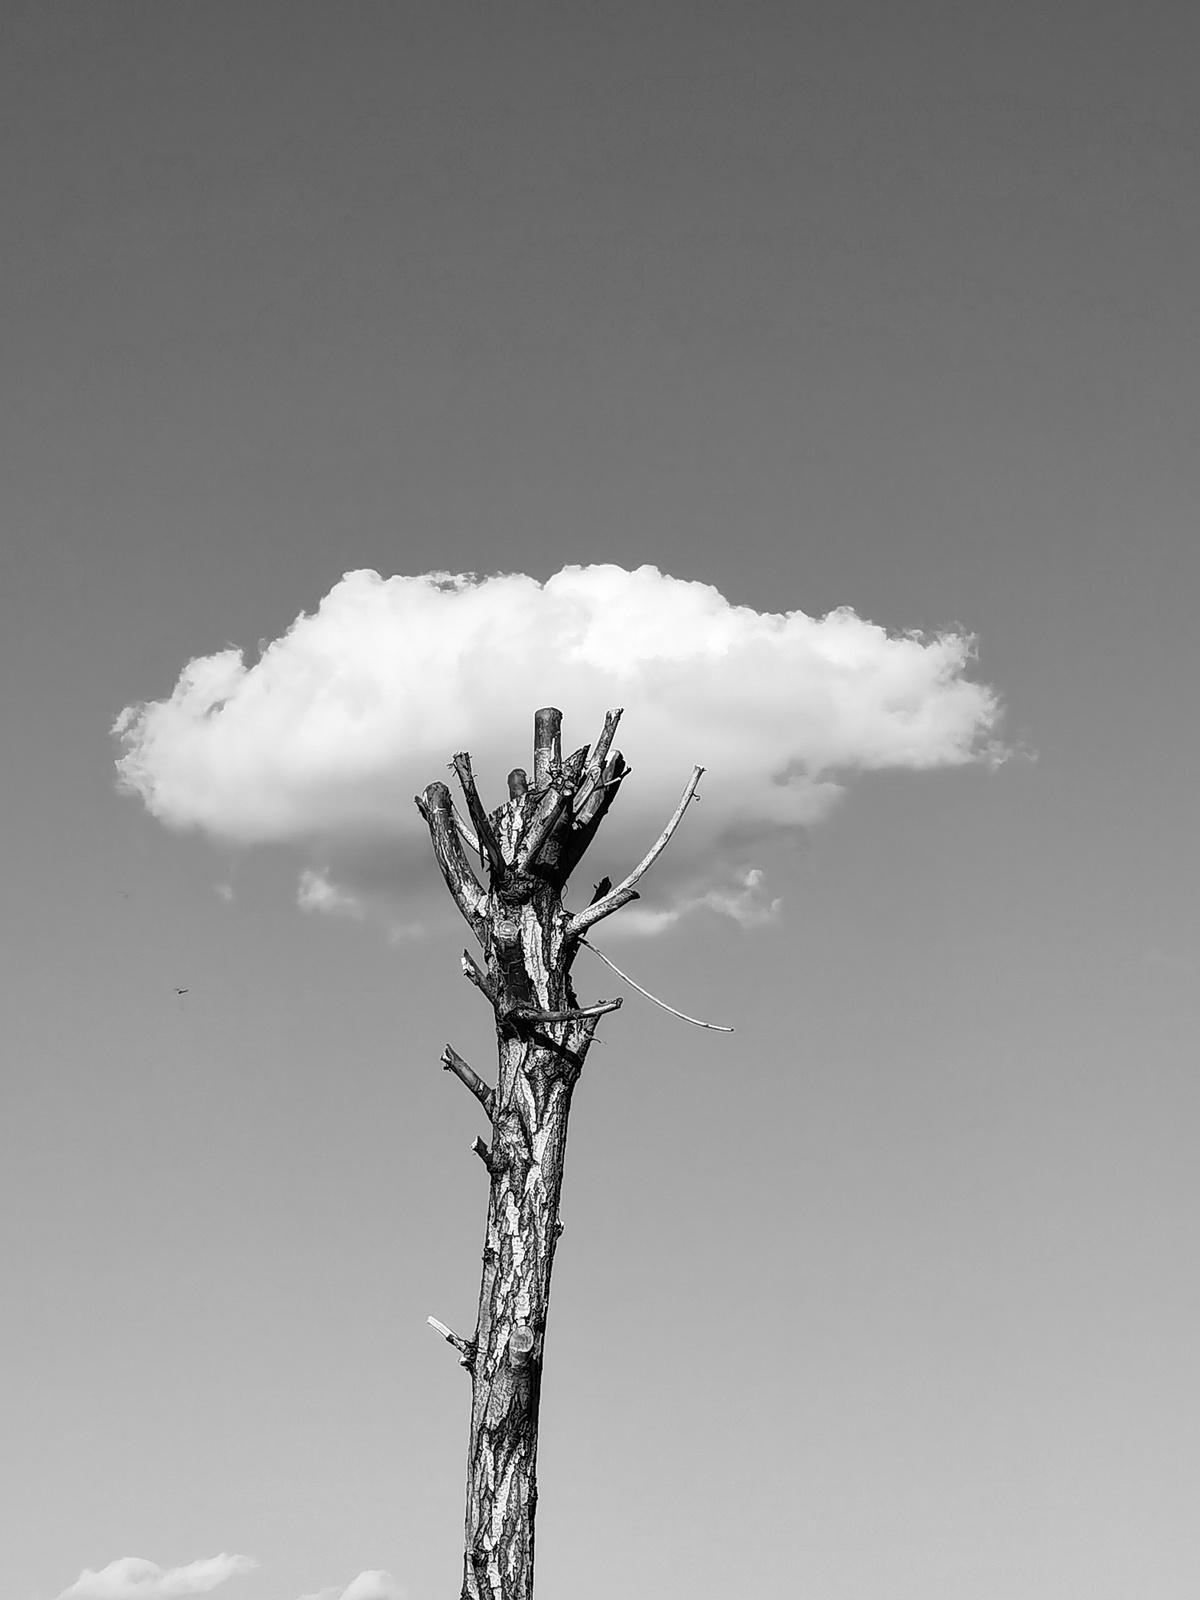 沙漠中孤独的一棵 standing alone in the desert with a cloud